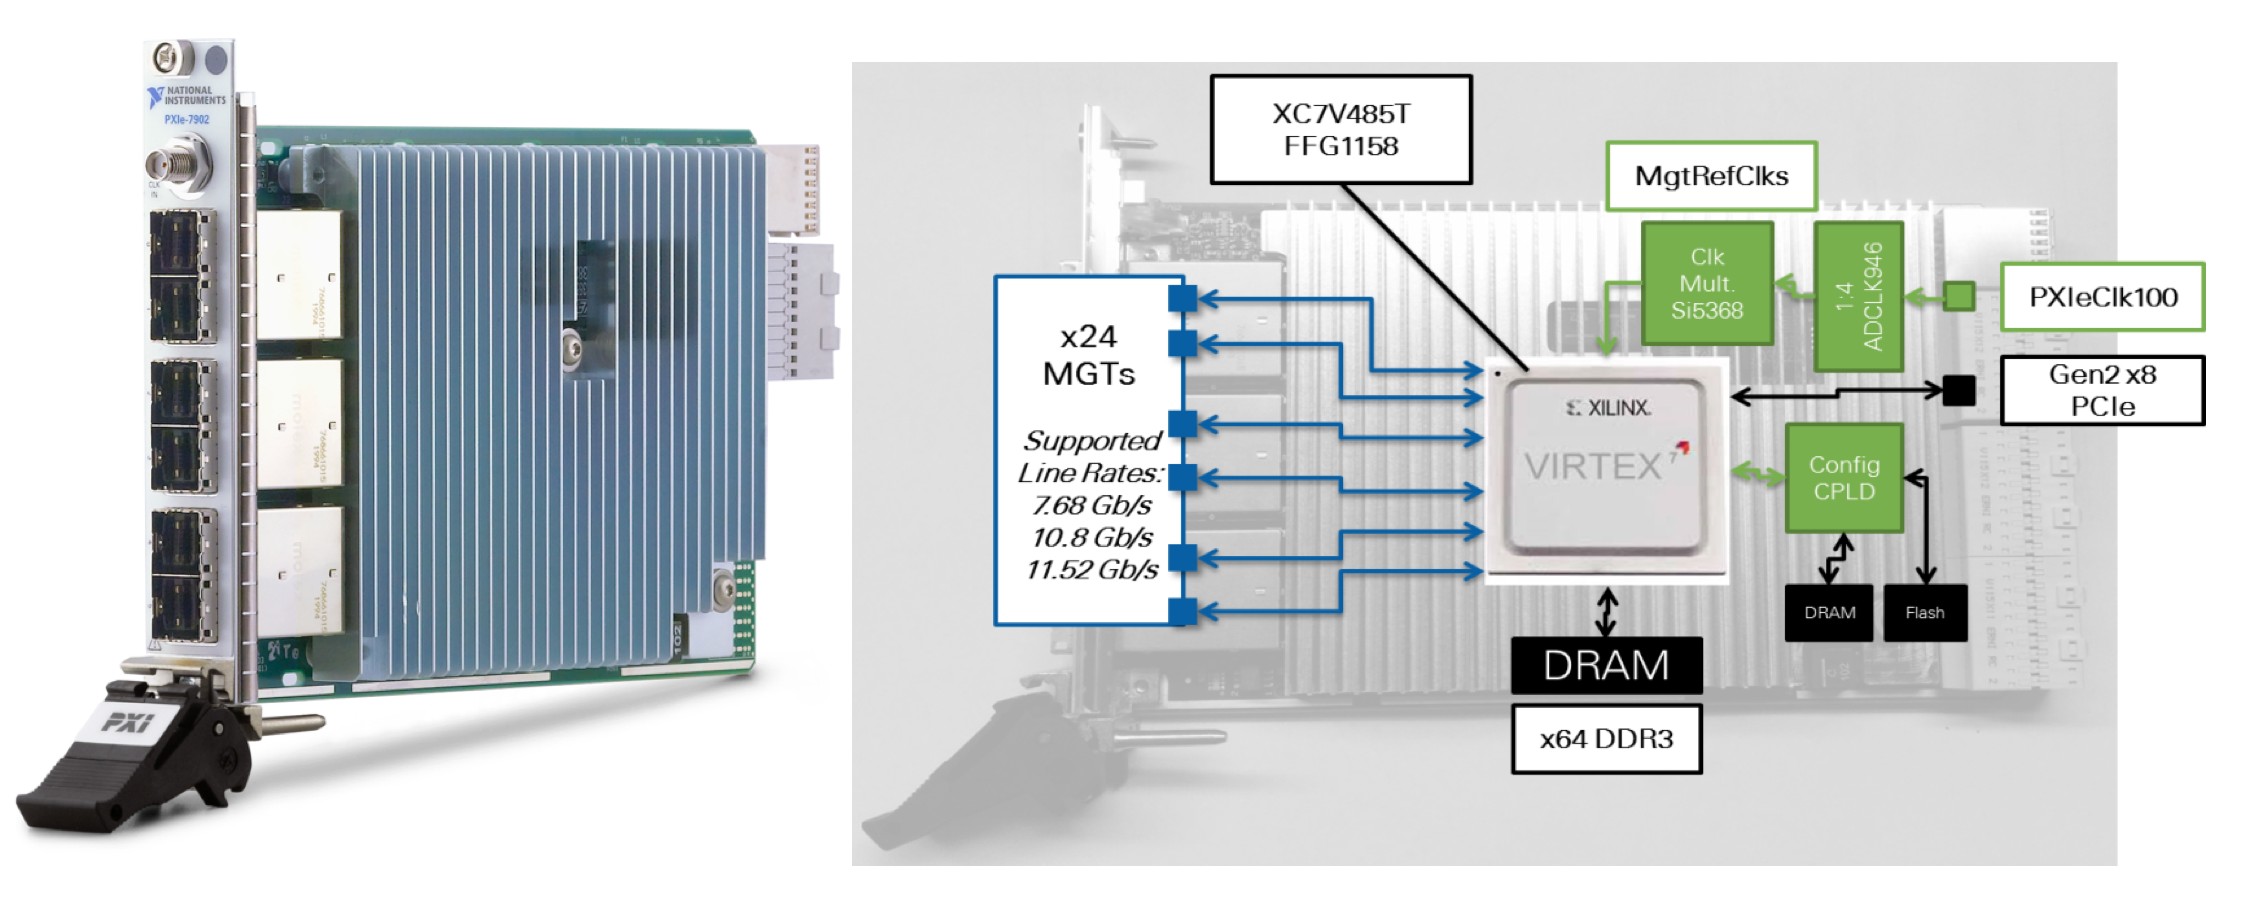 PXIe-7902R FPGA module and System Diagram 